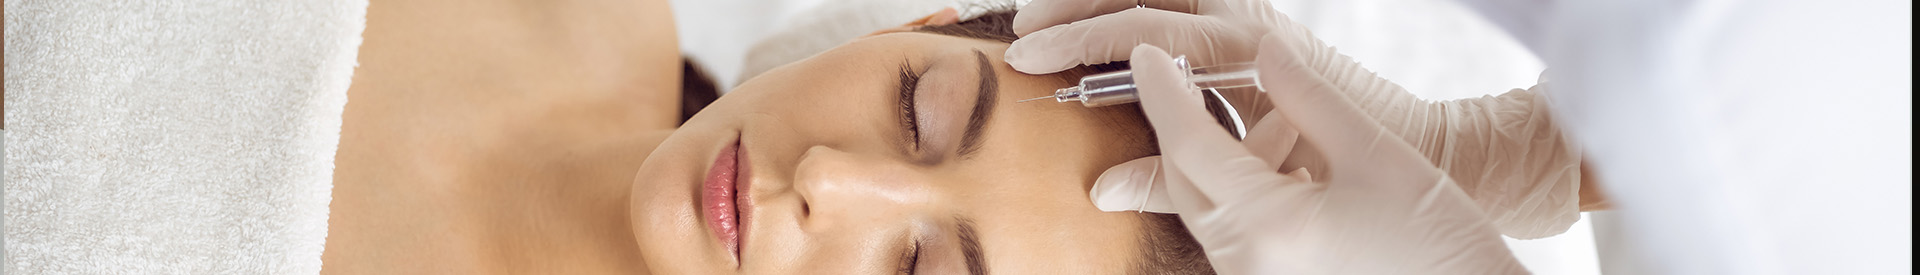 Woman Getting Botox in Forehead